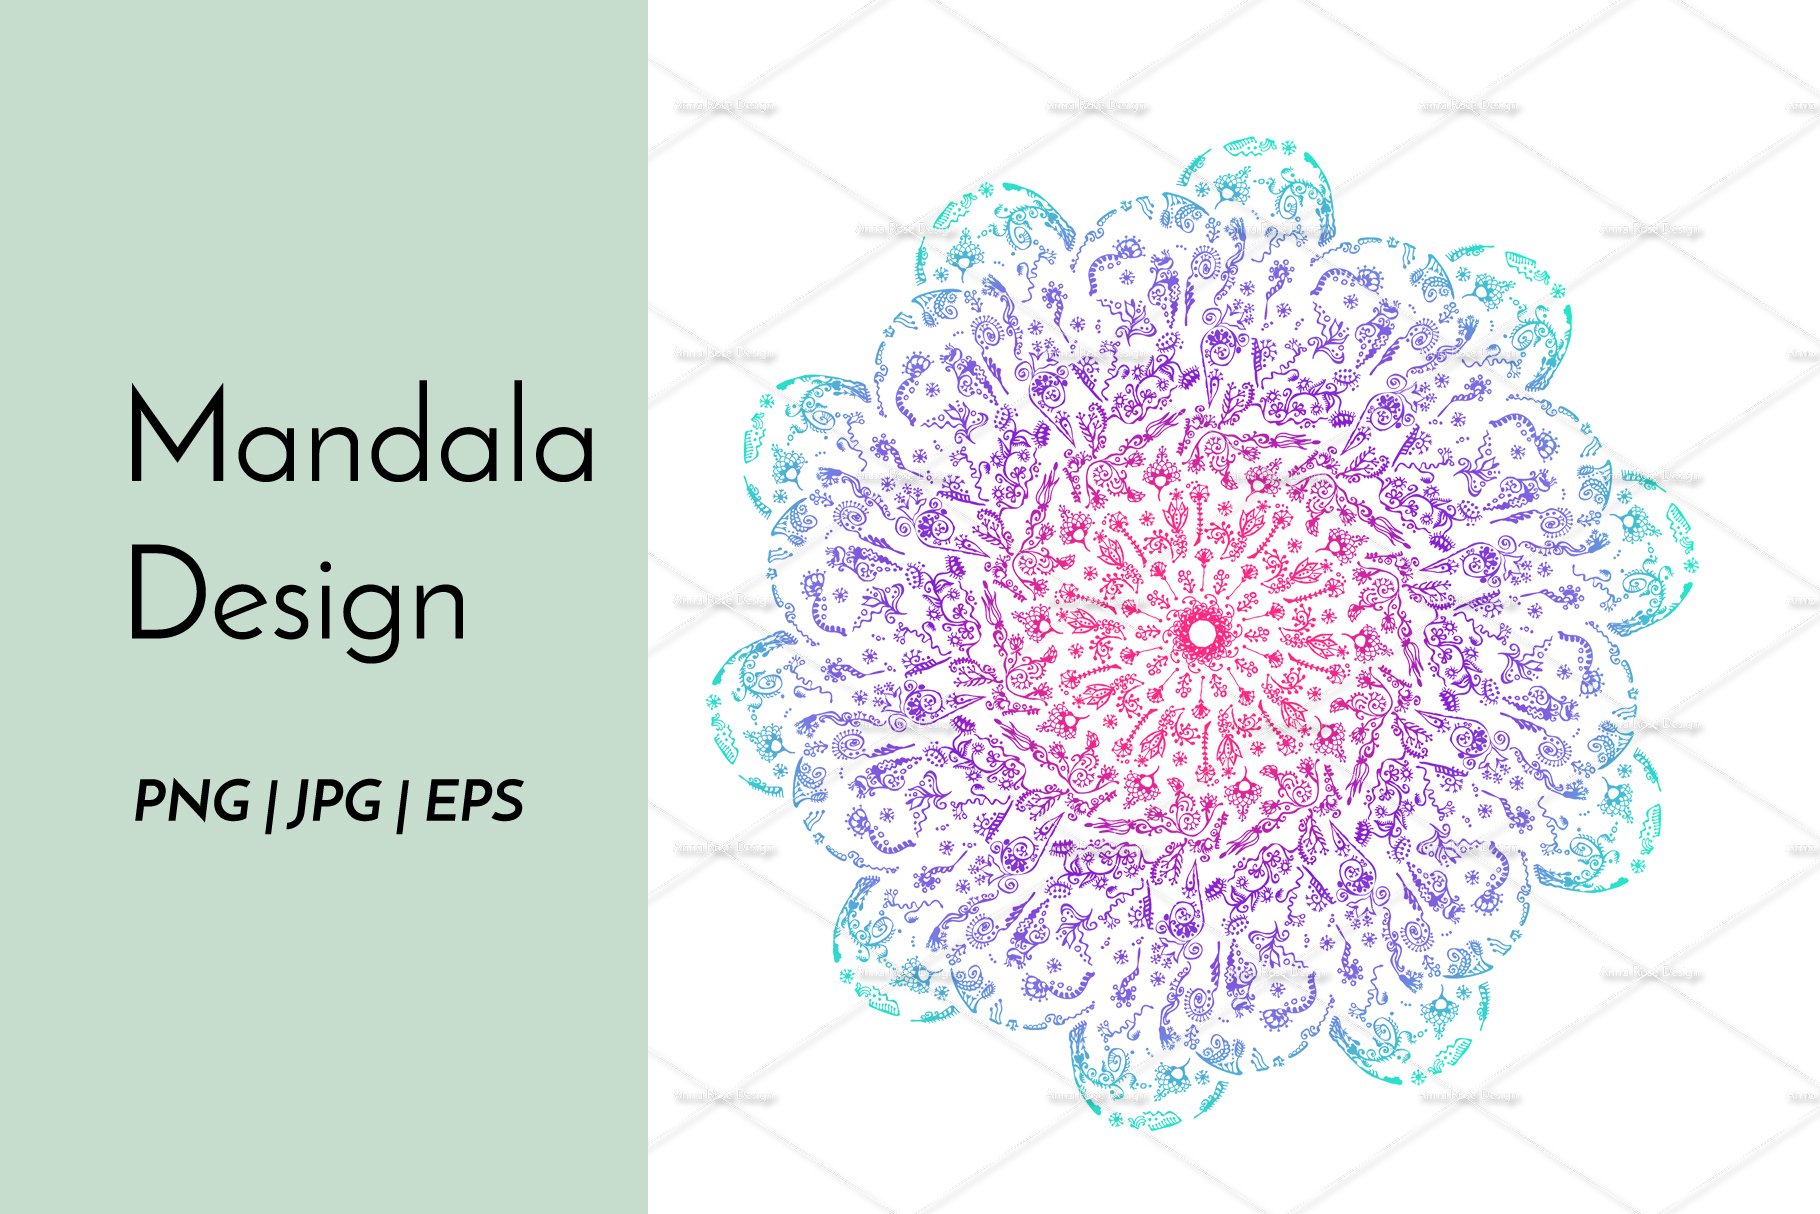 Mandala with interesting design.